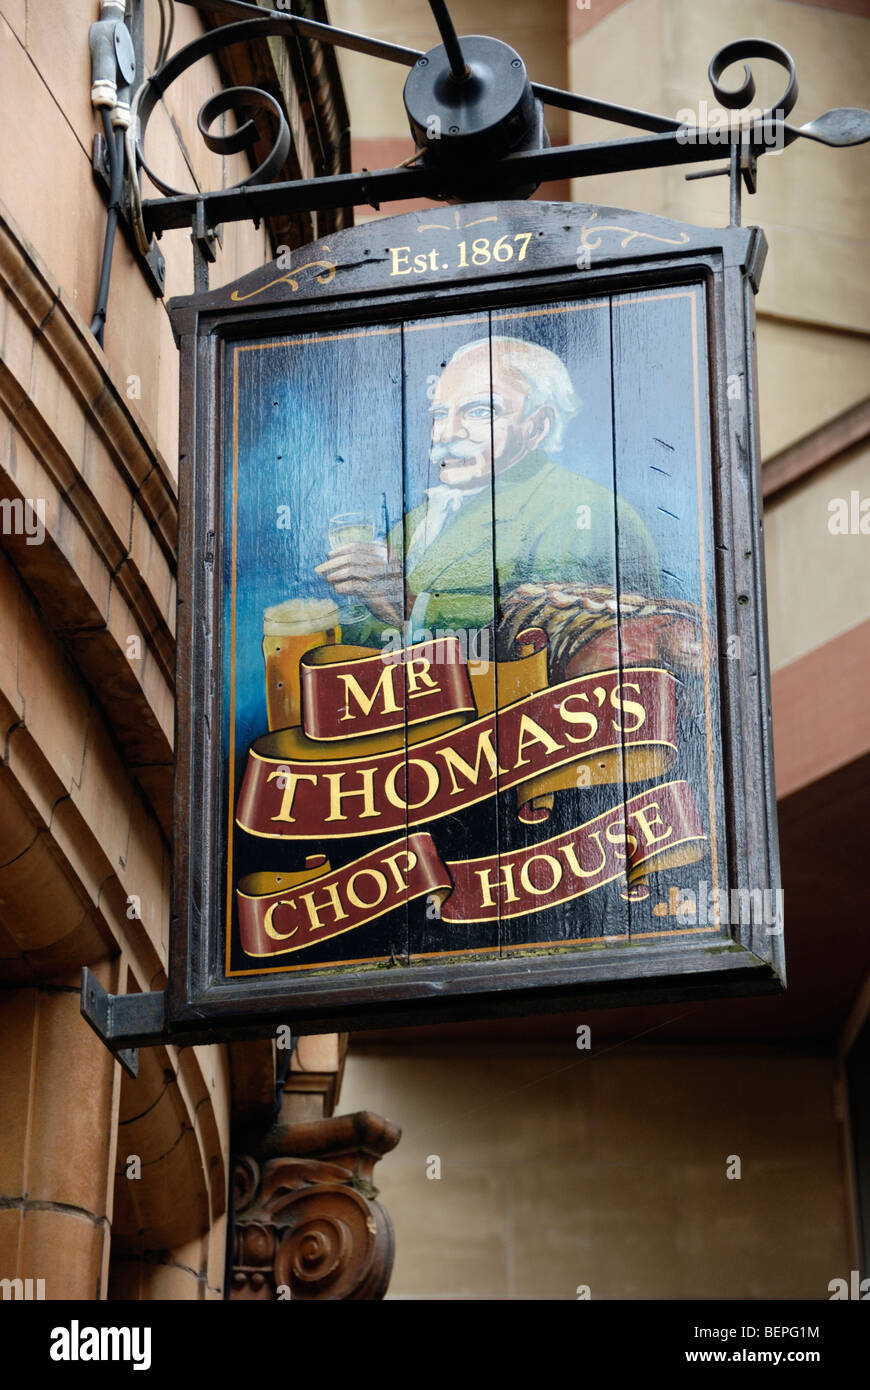 Herr Thomas Chop House Pub, Manchester, England, UK Stockfoto